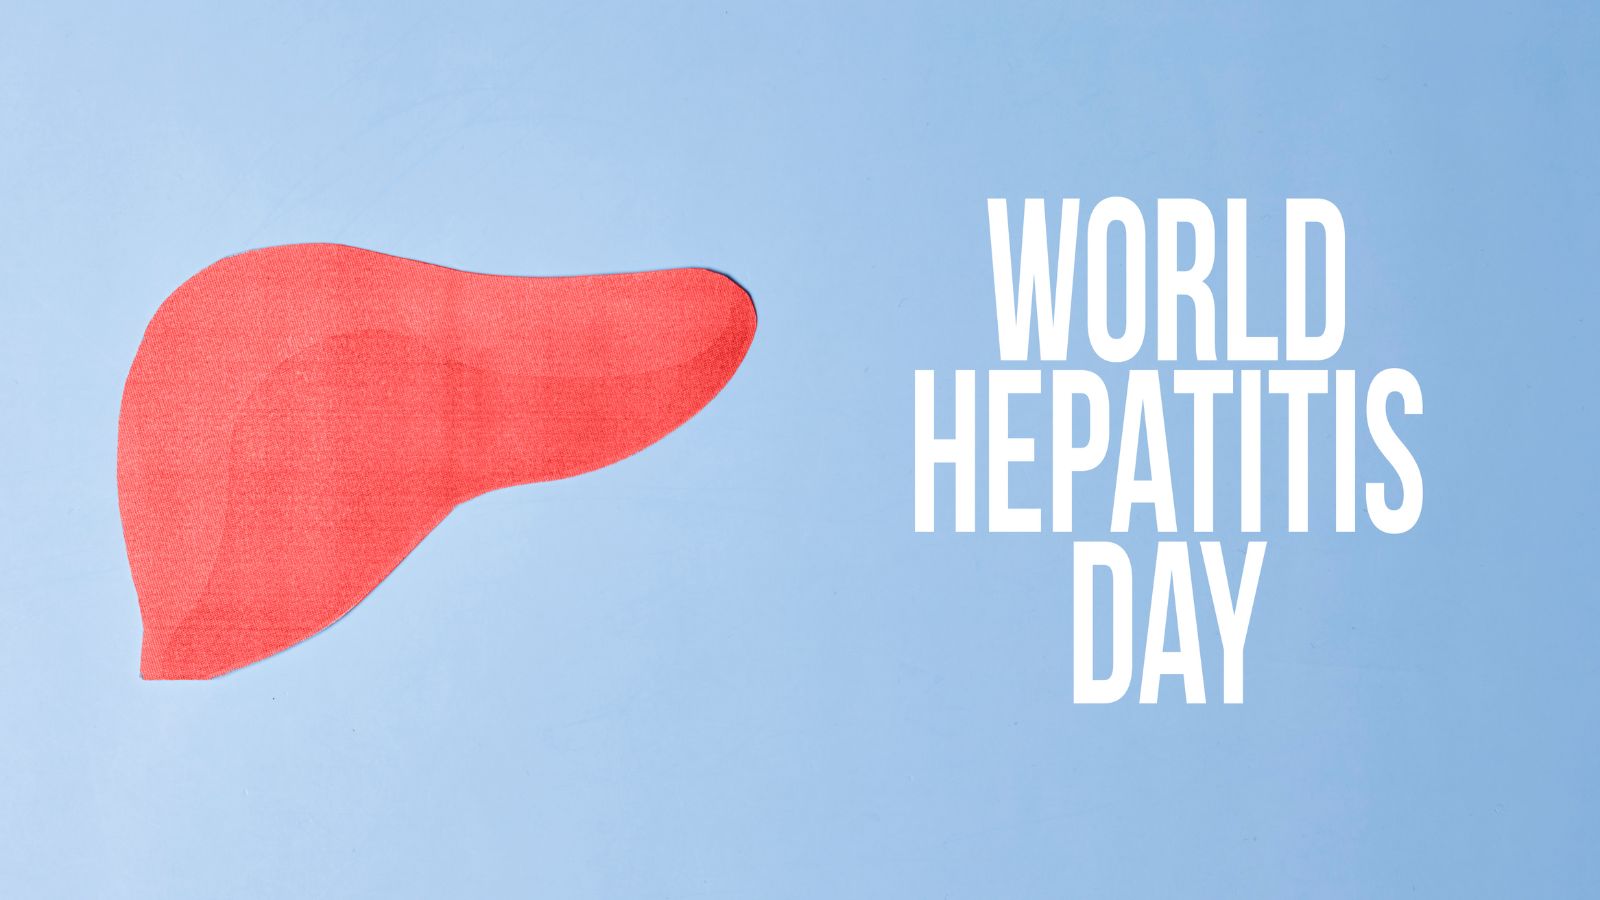 World Hepatitis Day 2023